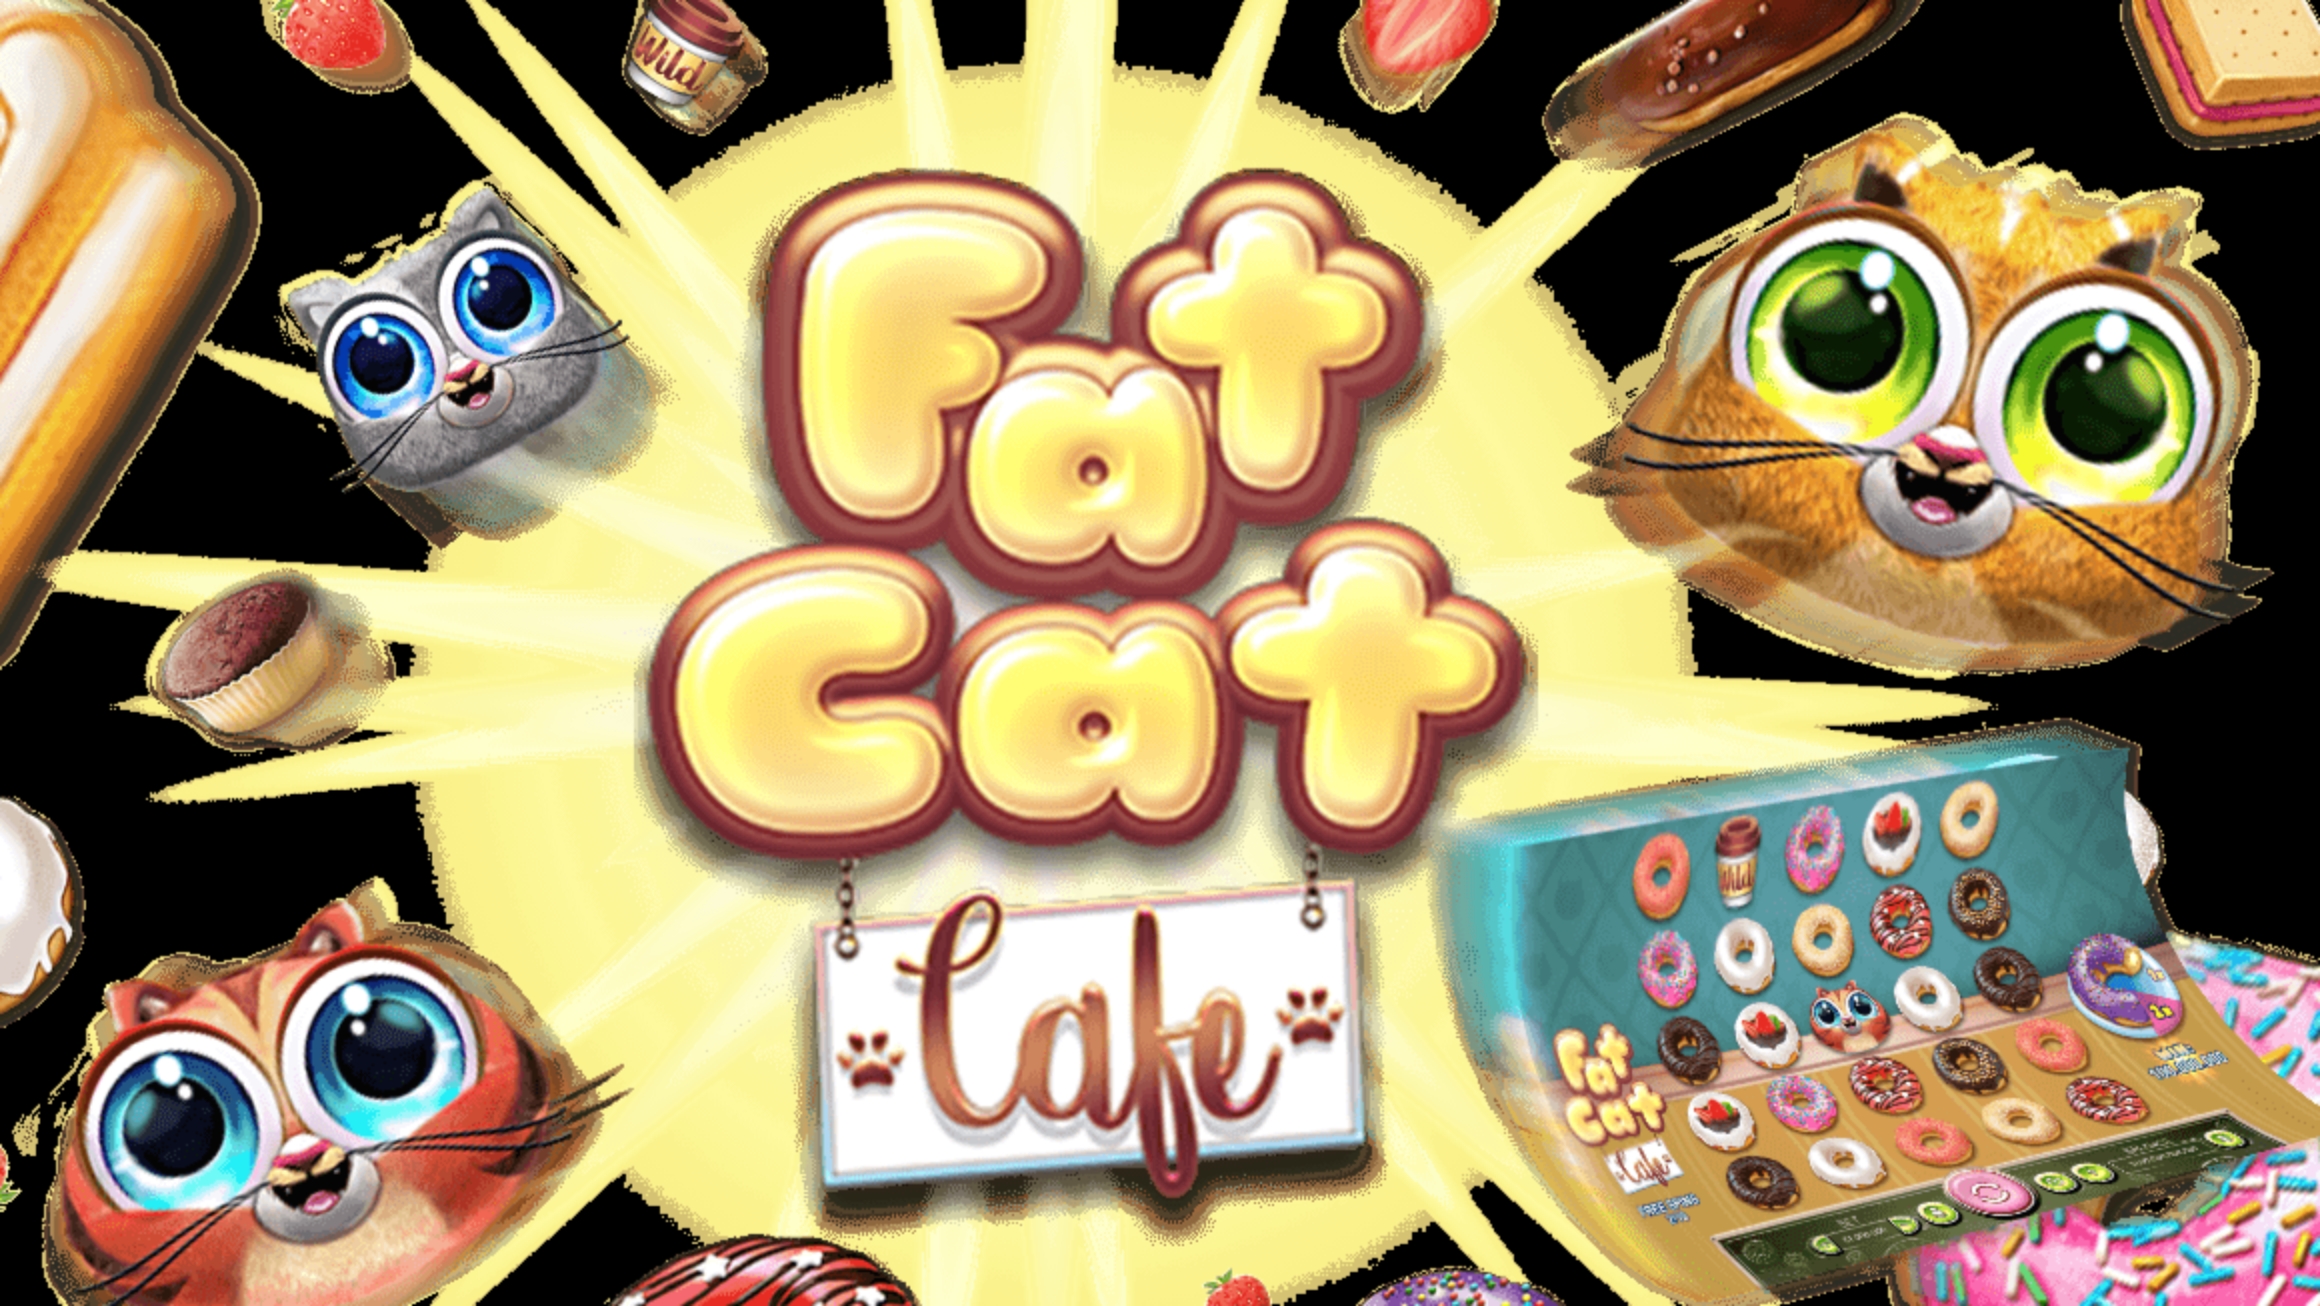 Fat Cat Cafe demo